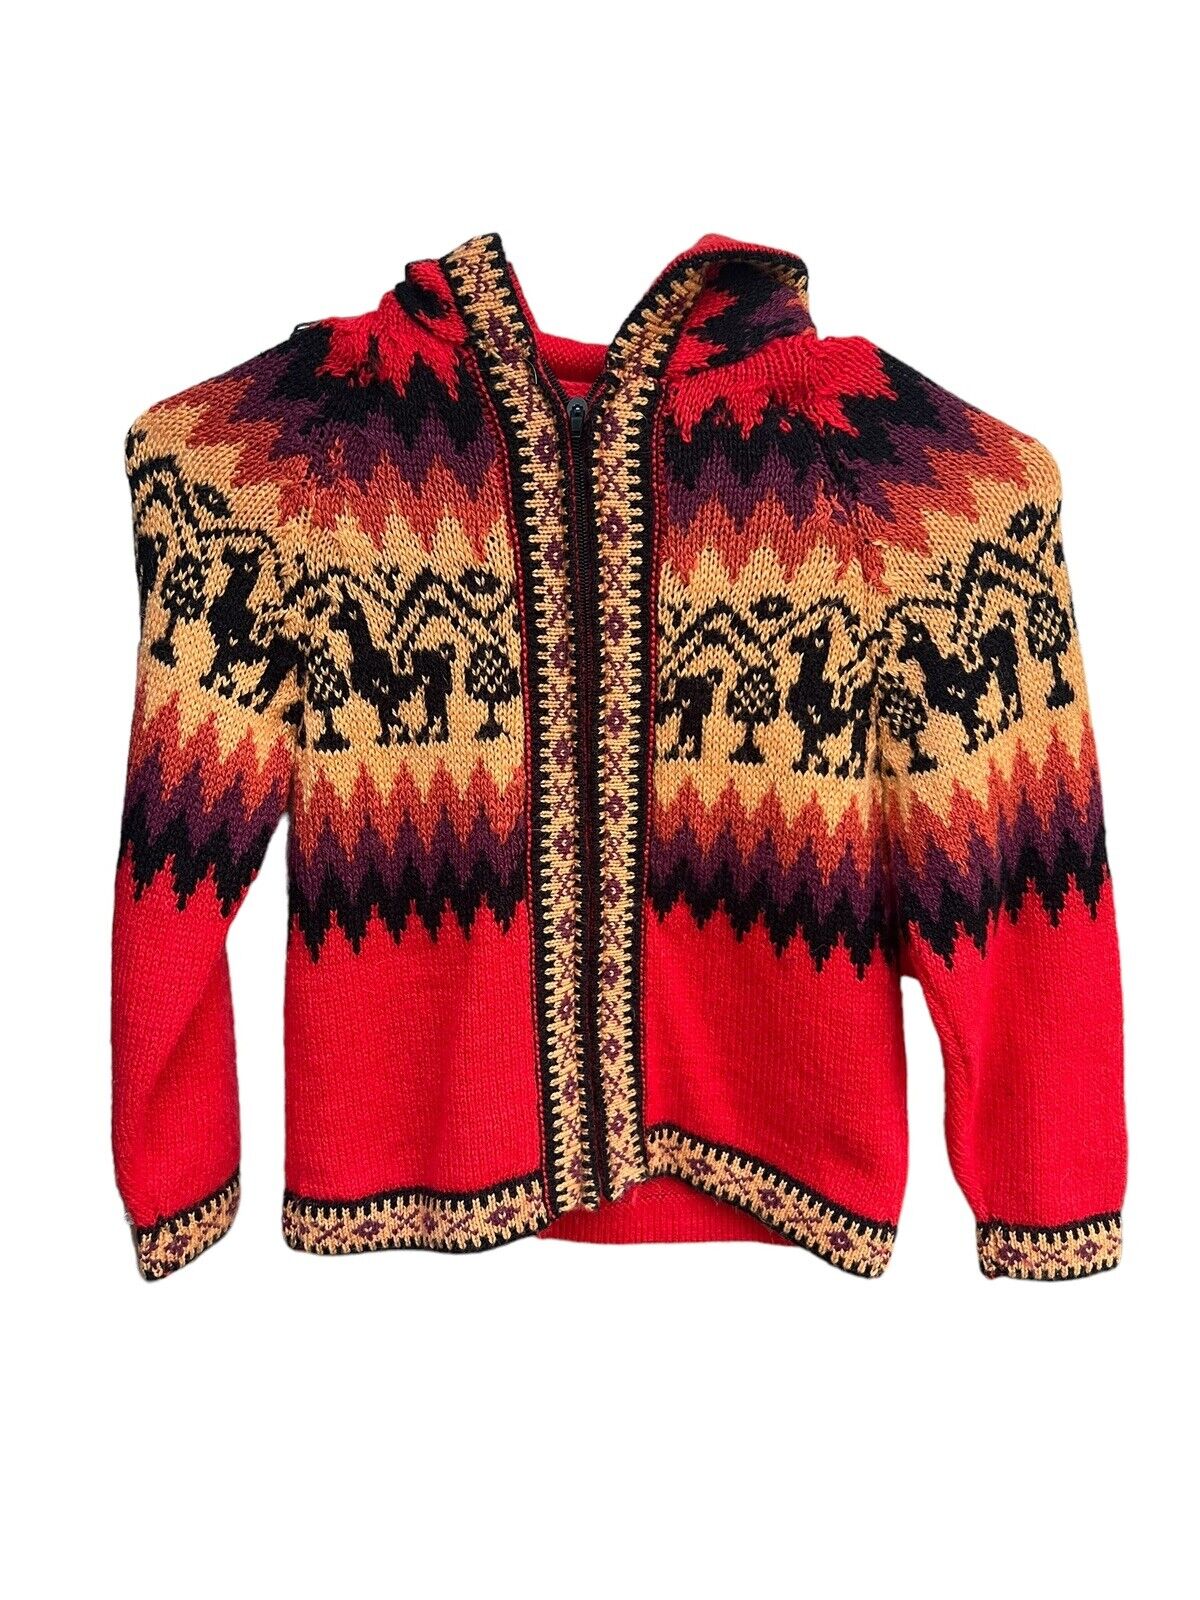 Peruvian Hoodie Colorful Full Zip Sweater Size Small 17” L  14” W LLamas